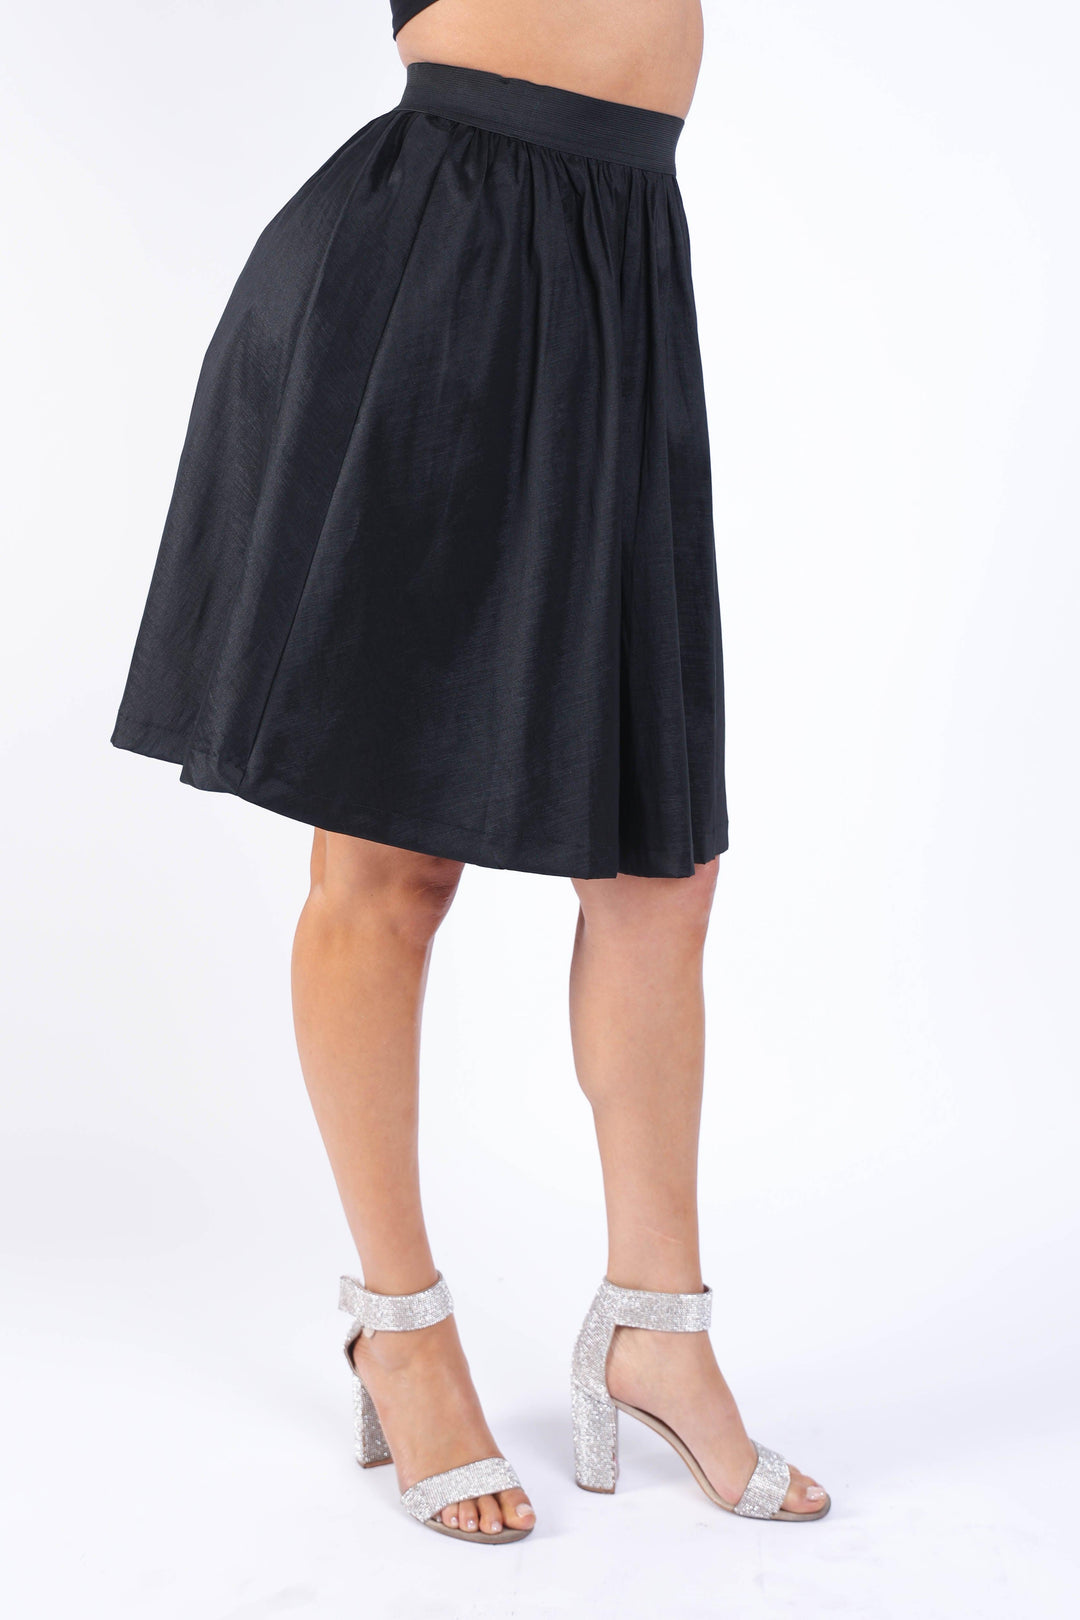 Casual Elastic High Waist Pleated Midi Flare Black Skirt - Brand My Case